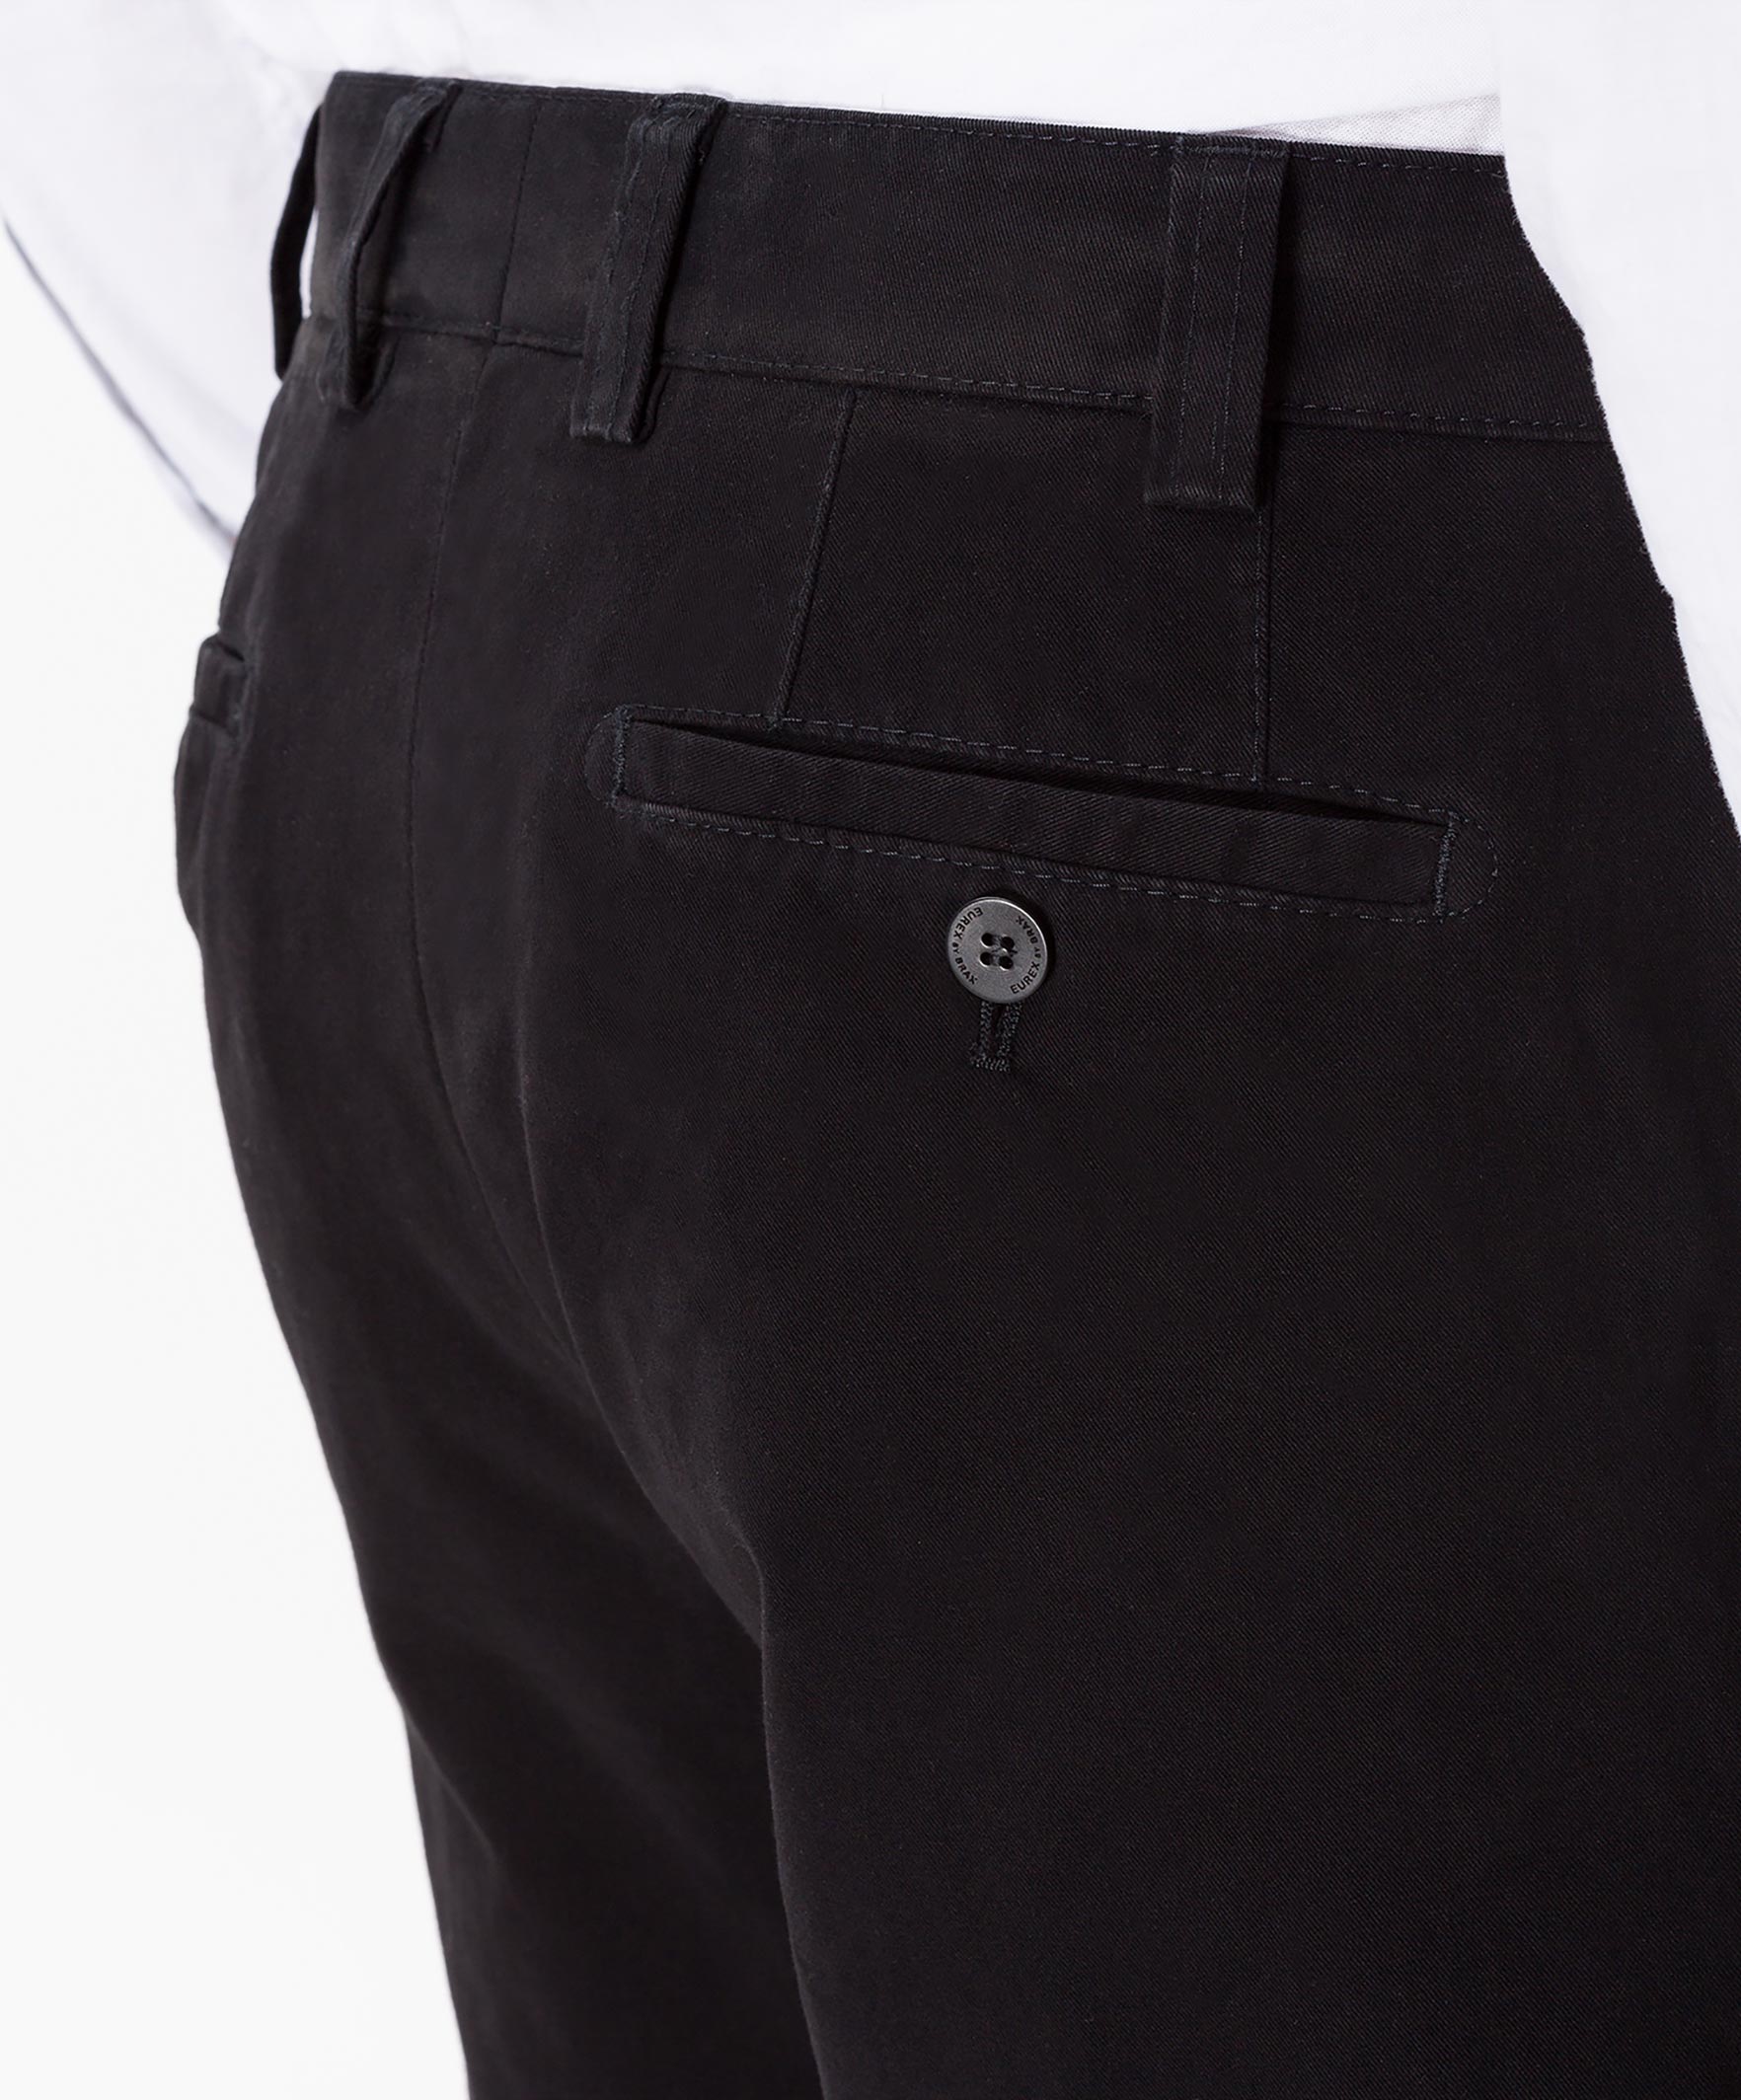 Fluisteren landen Logisch Brax Luis 347 Winter Gabardine Pants Black | Jan Rozing Men's Fashion